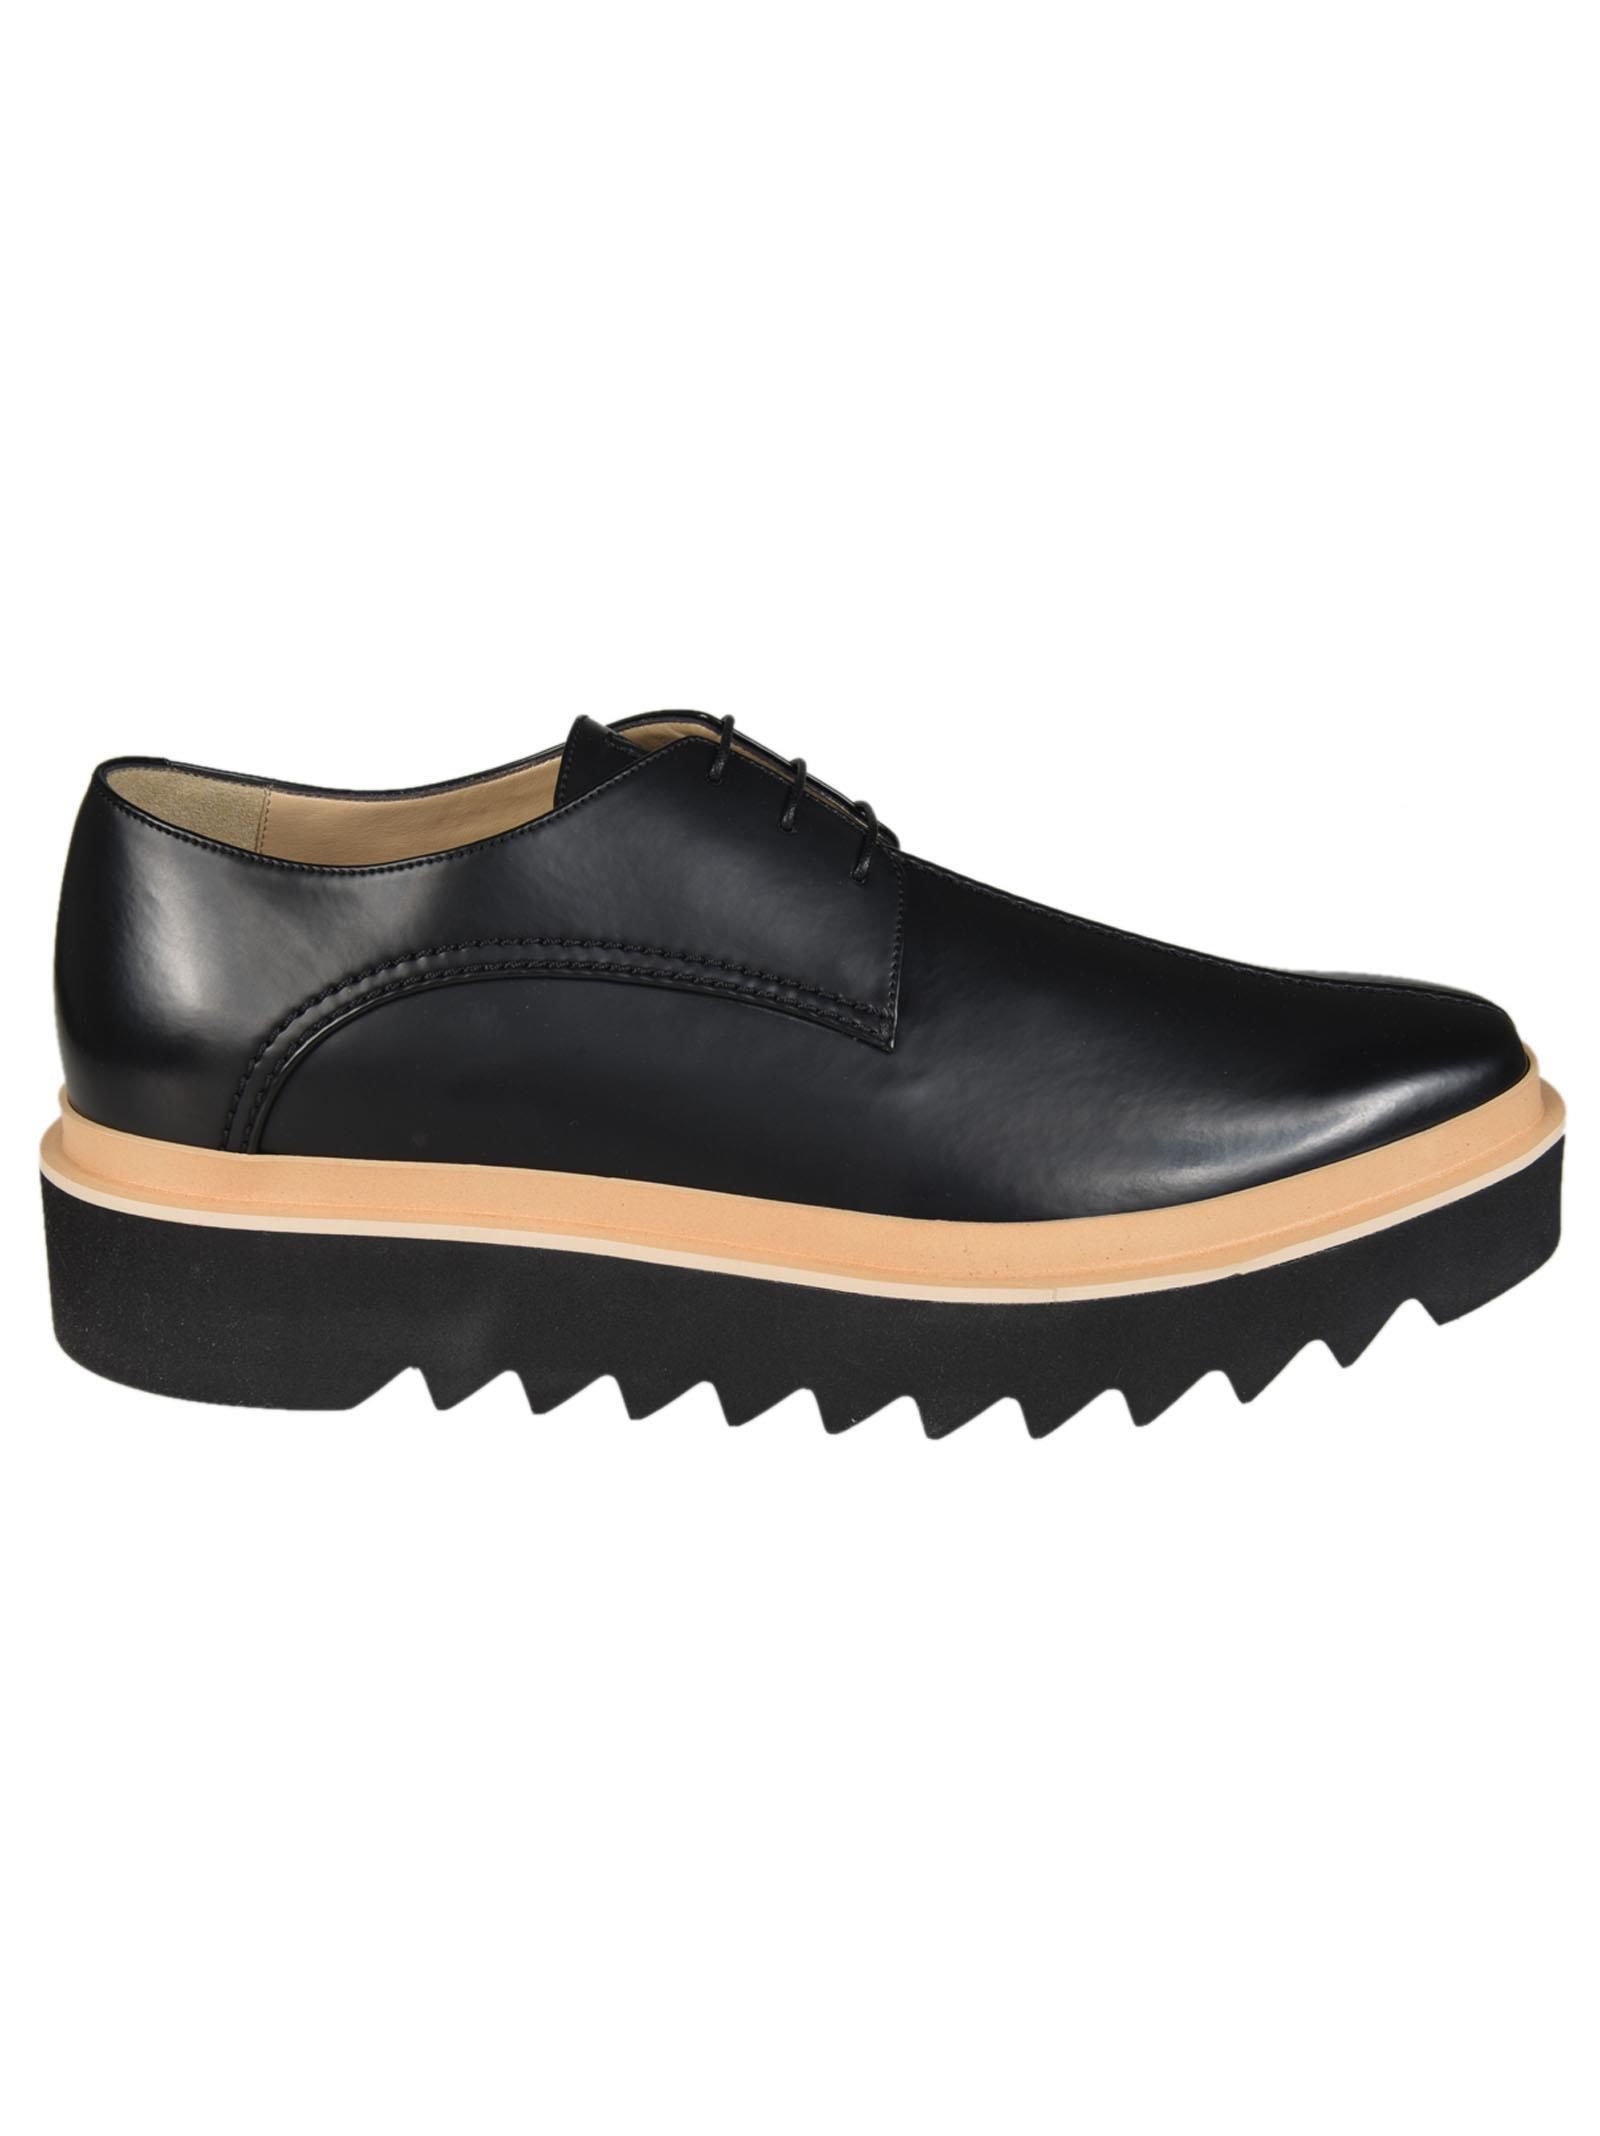 STELLA MCCARTNEY Faux-Leather Platform Derby Shoes in Black Multi ...